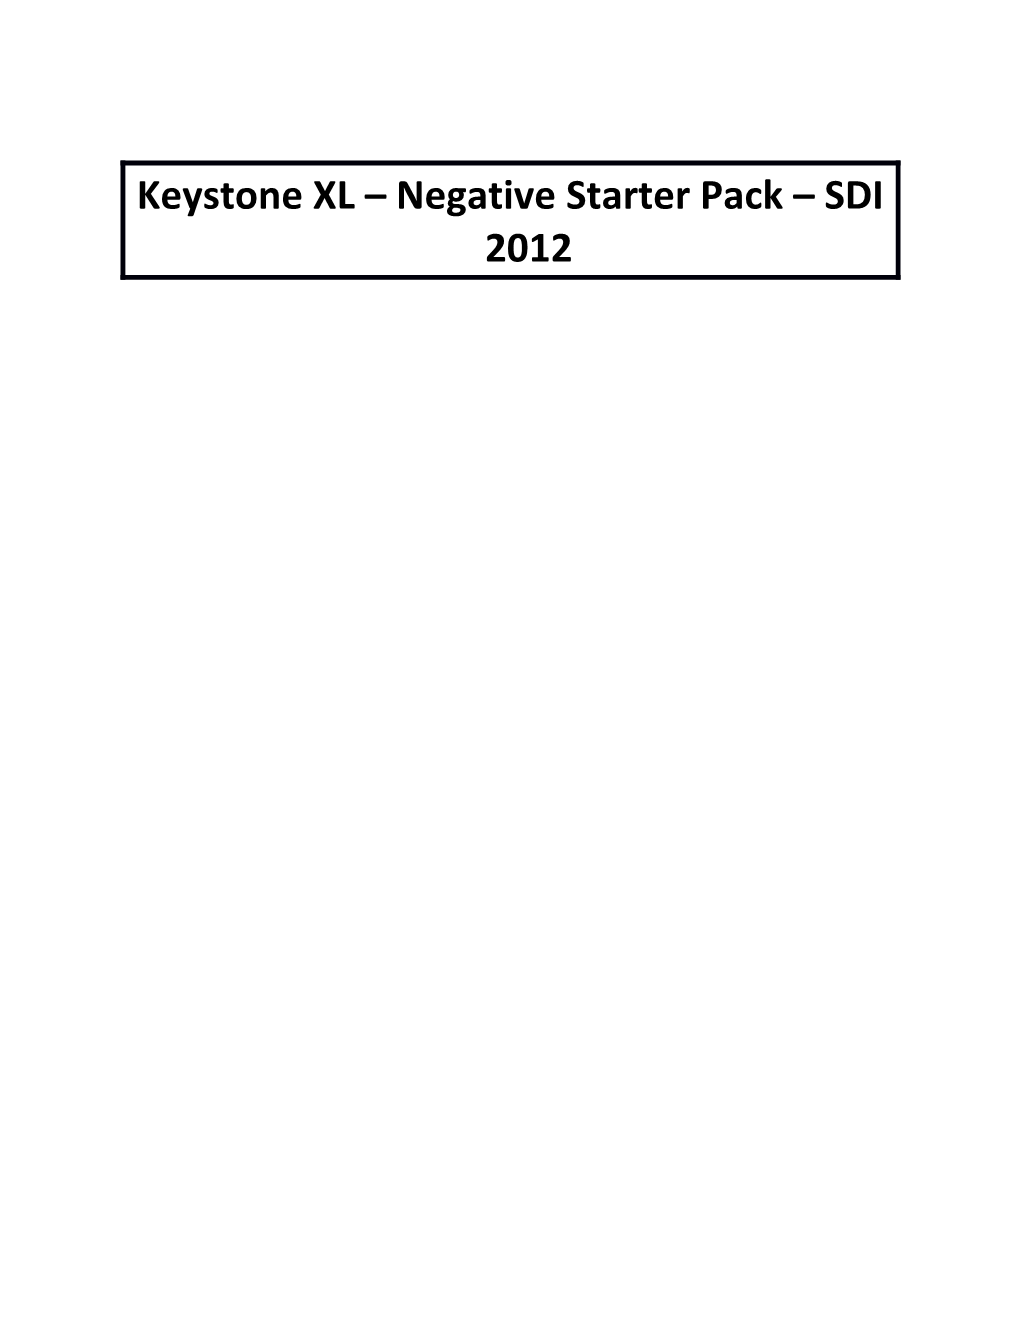 Keystone XL Negative Starter Pack SDI 2012